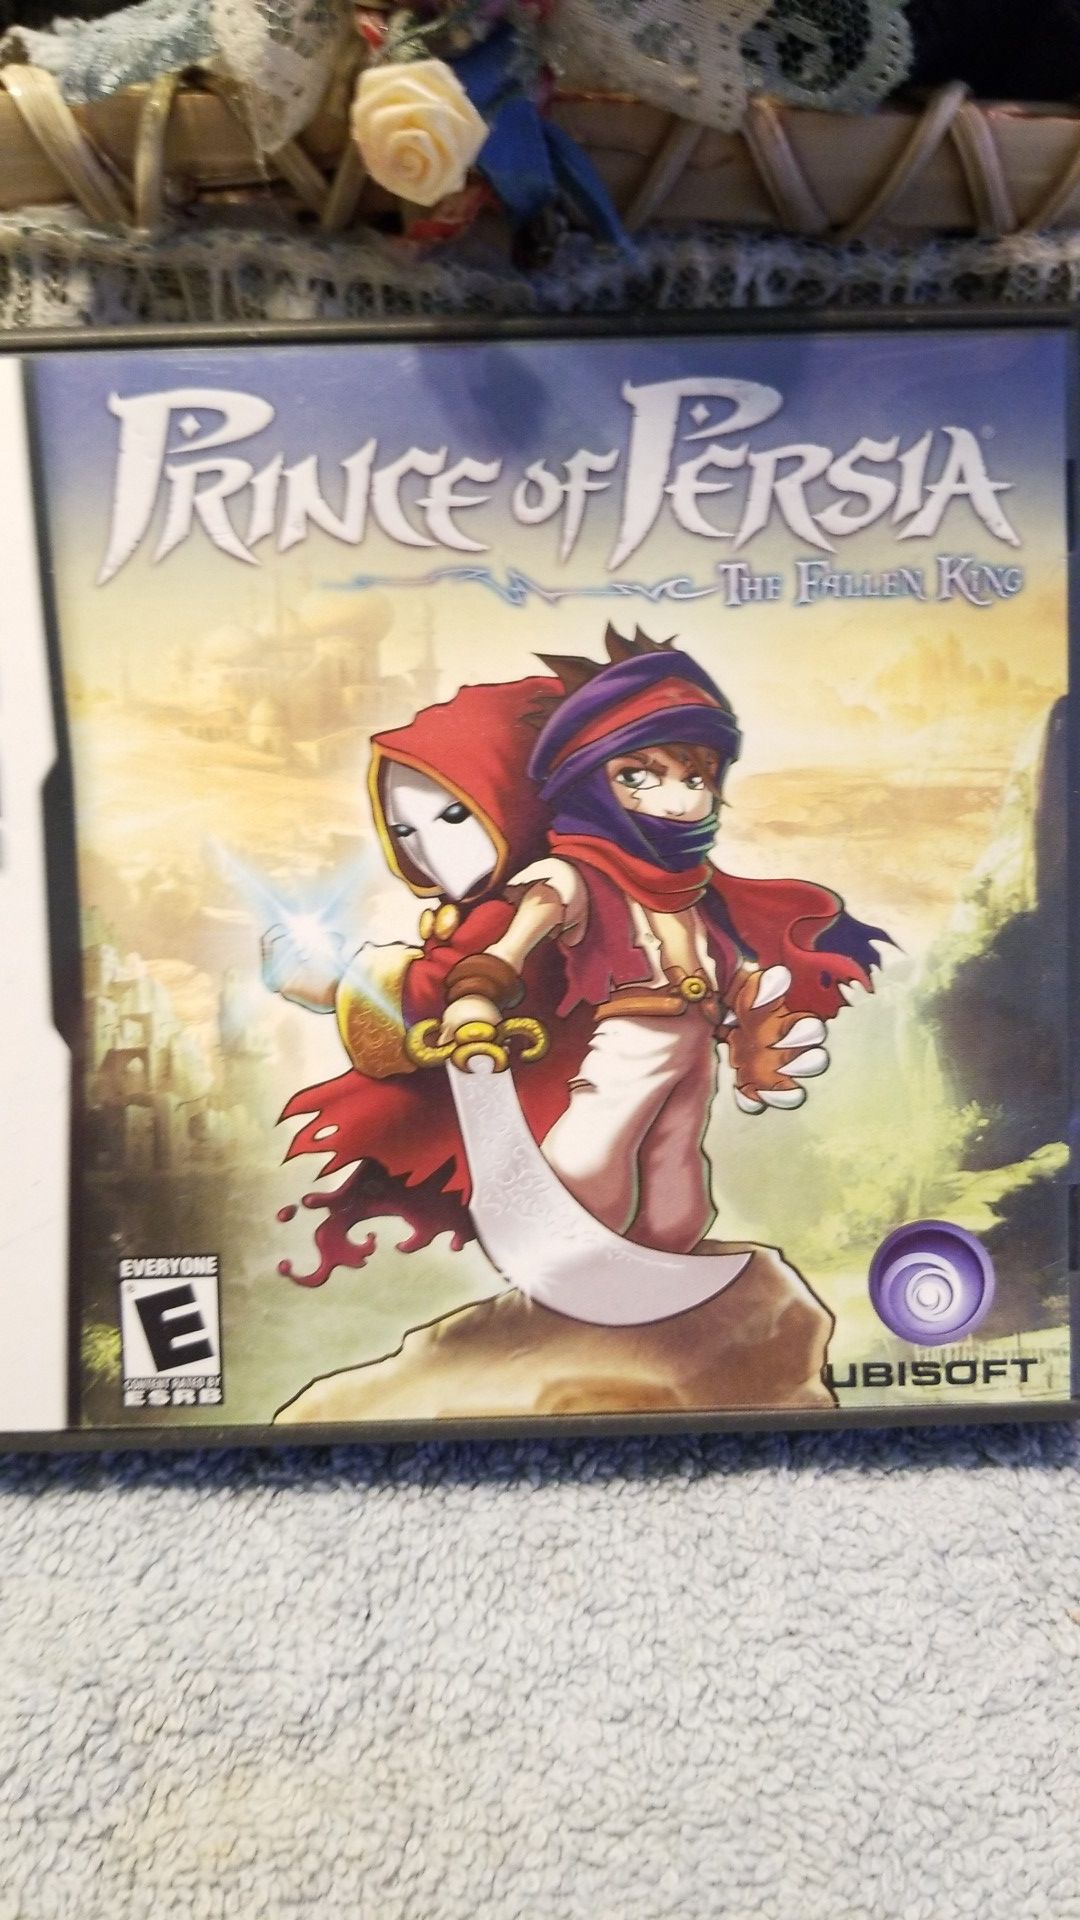 Prince of persia game